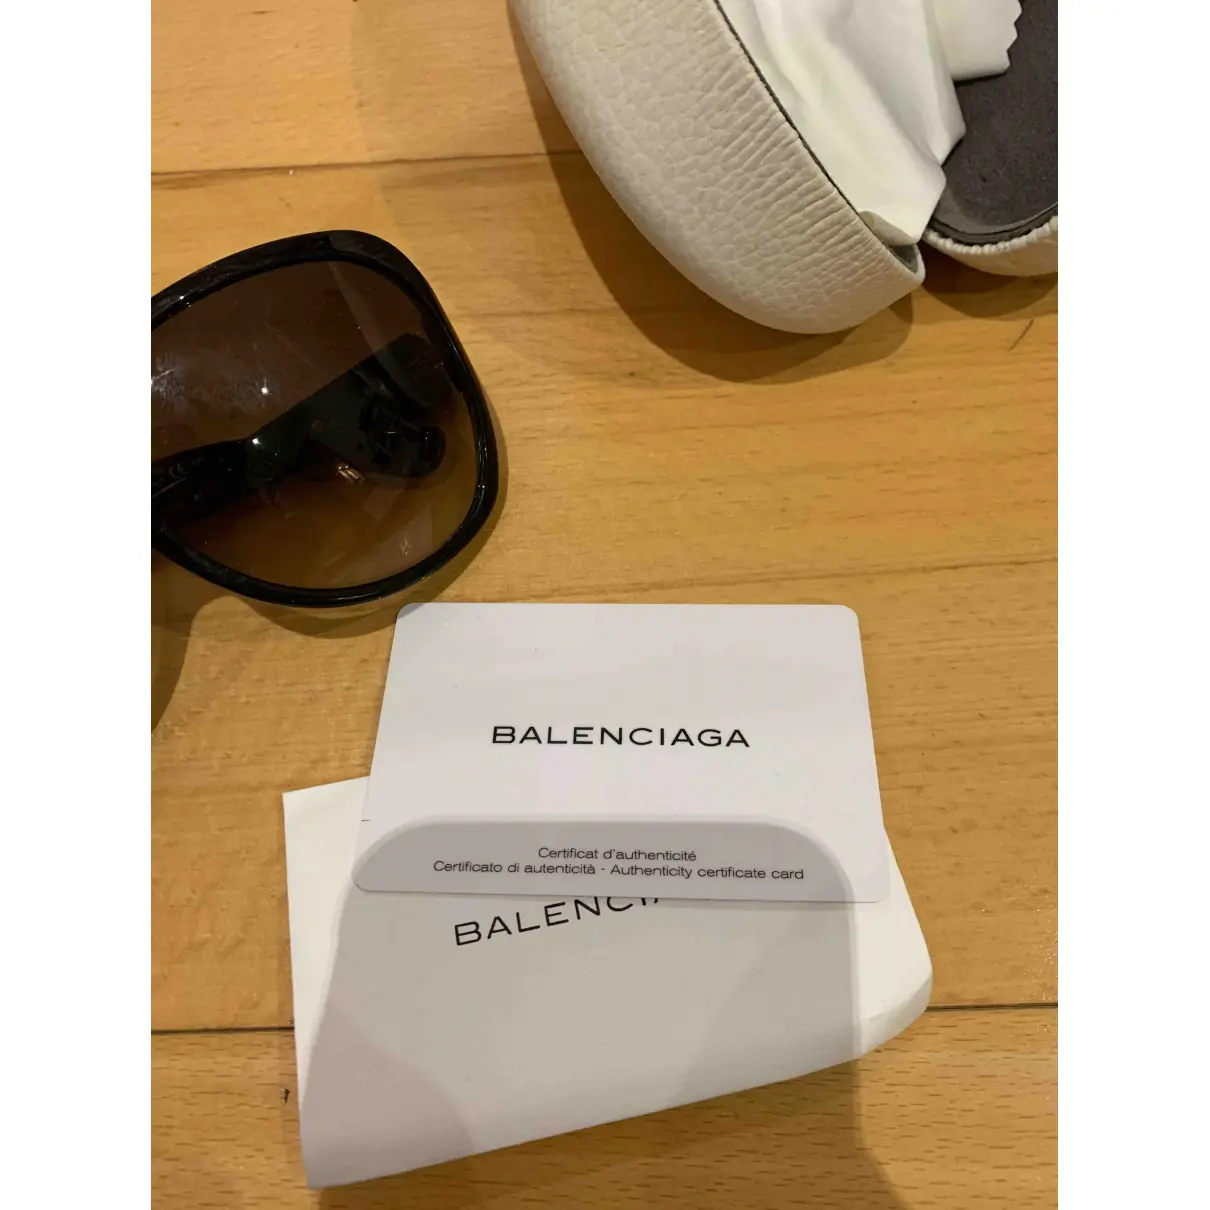 Oversized sunglasses Balenciaga